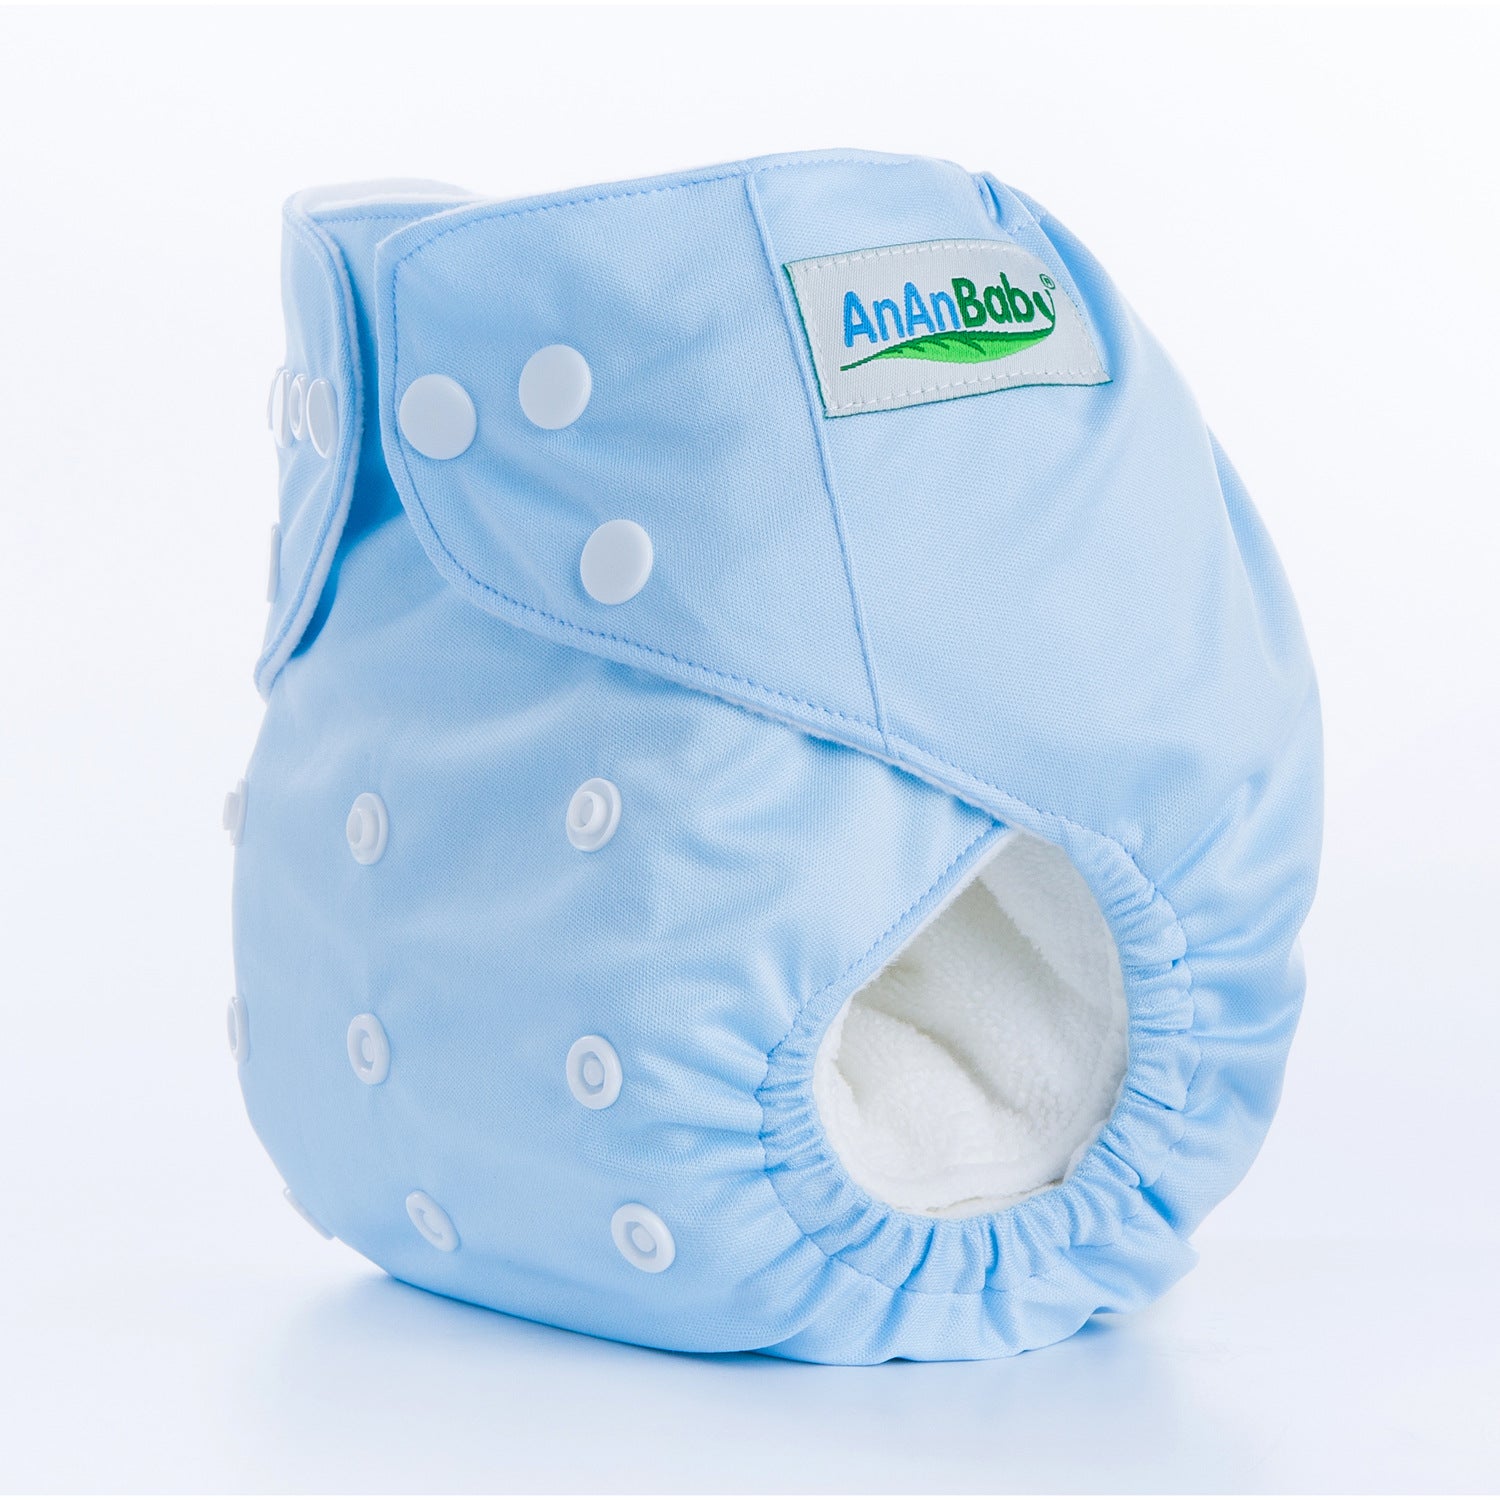 Solid color leak-proof baby diaper pants baby magazin 